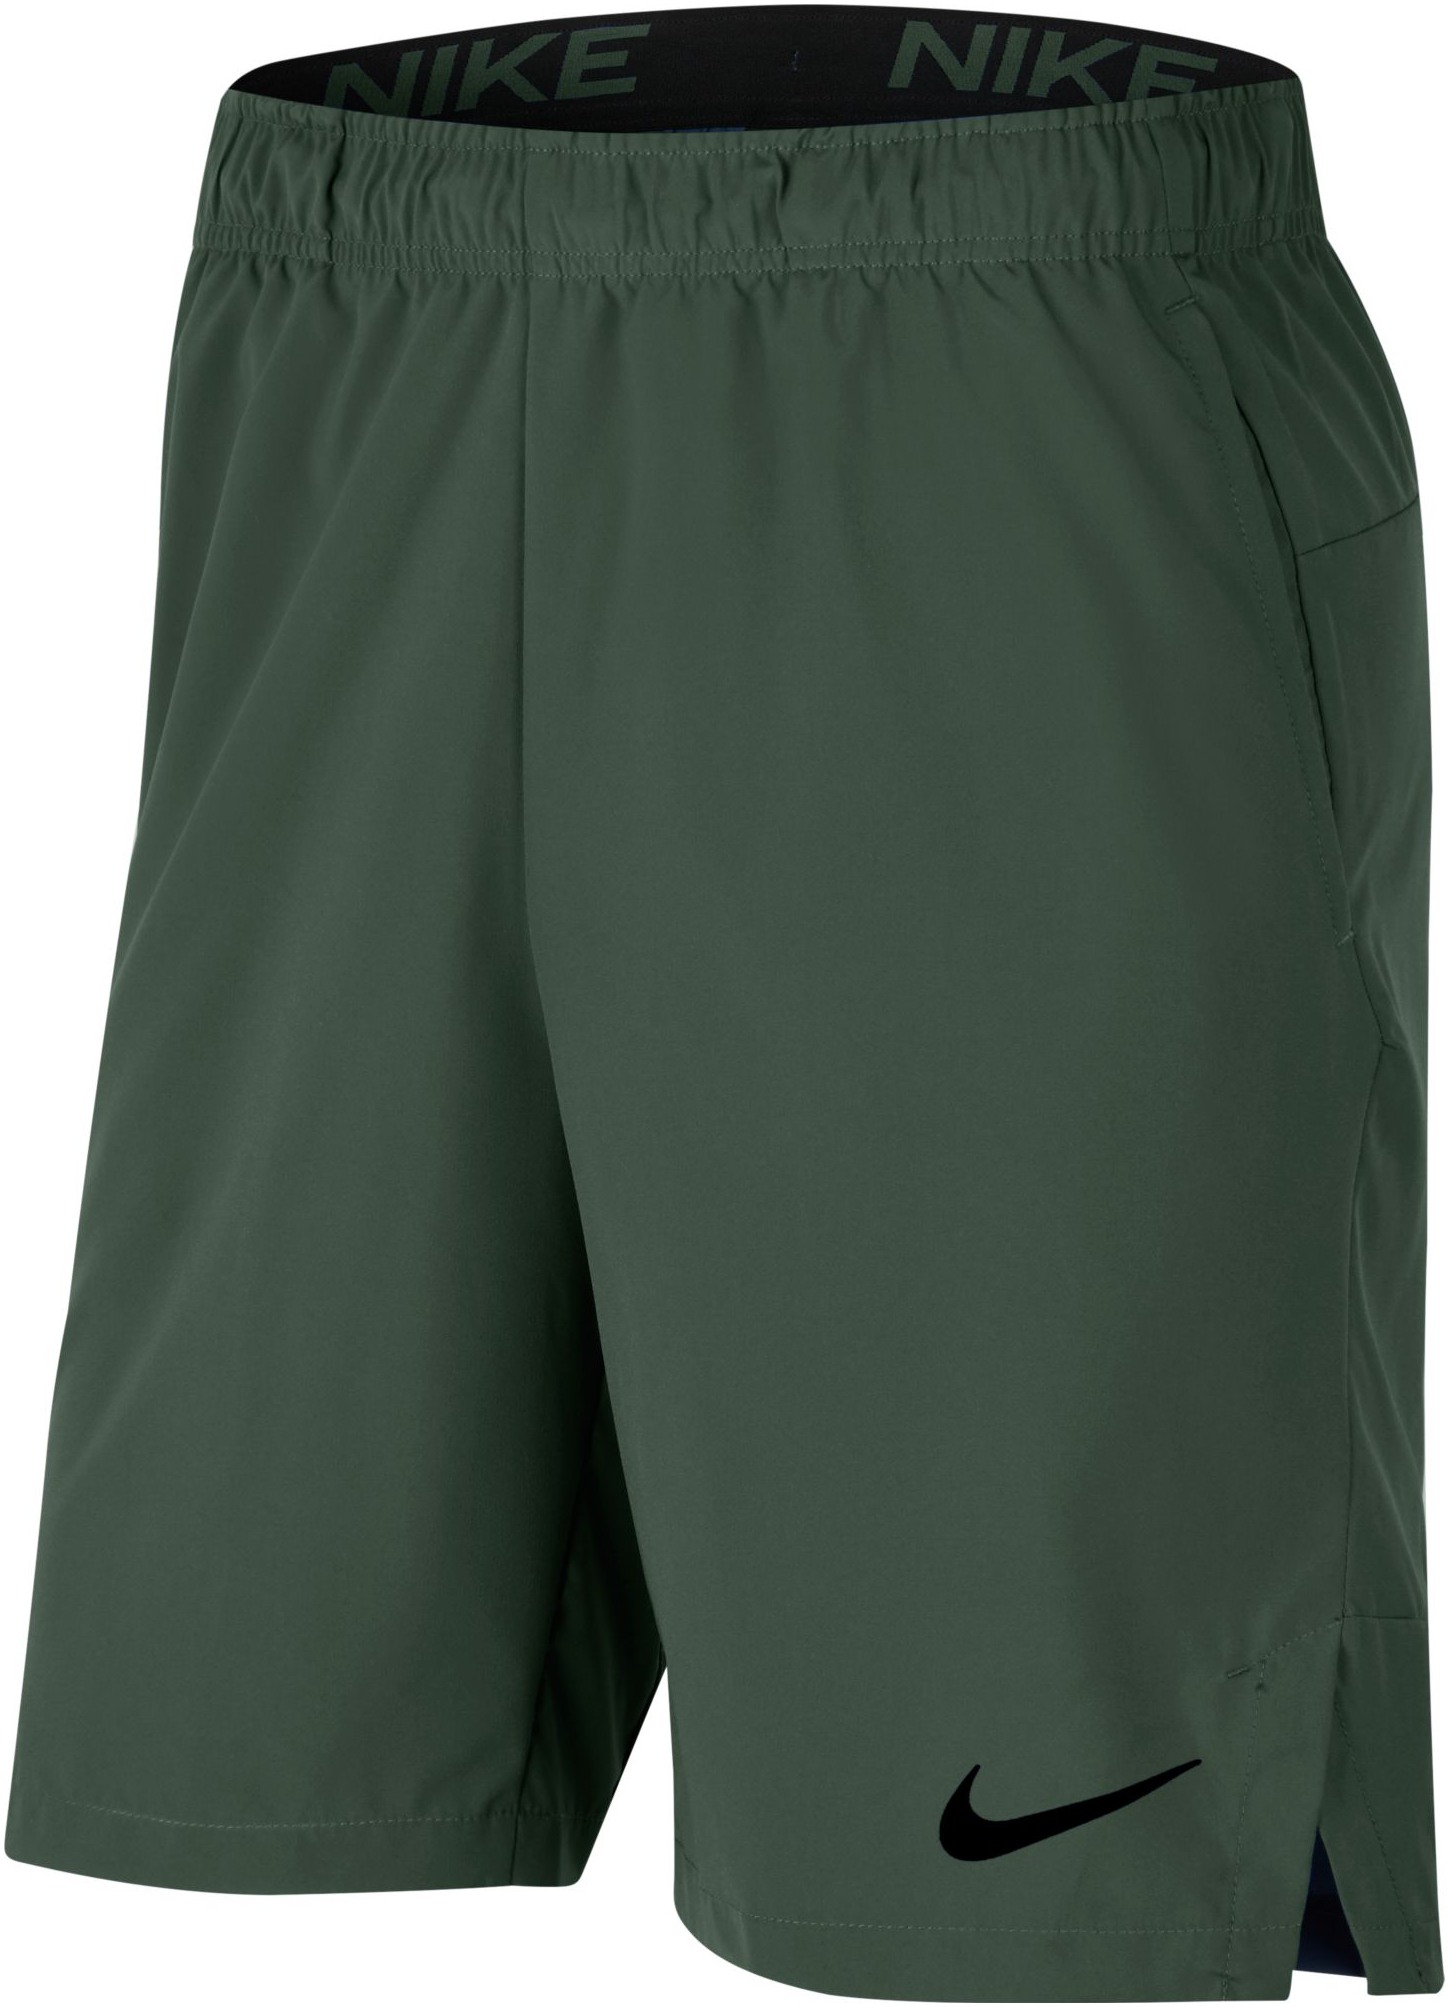 Mens sports shorts Nike FLEX green | AD Sport.store